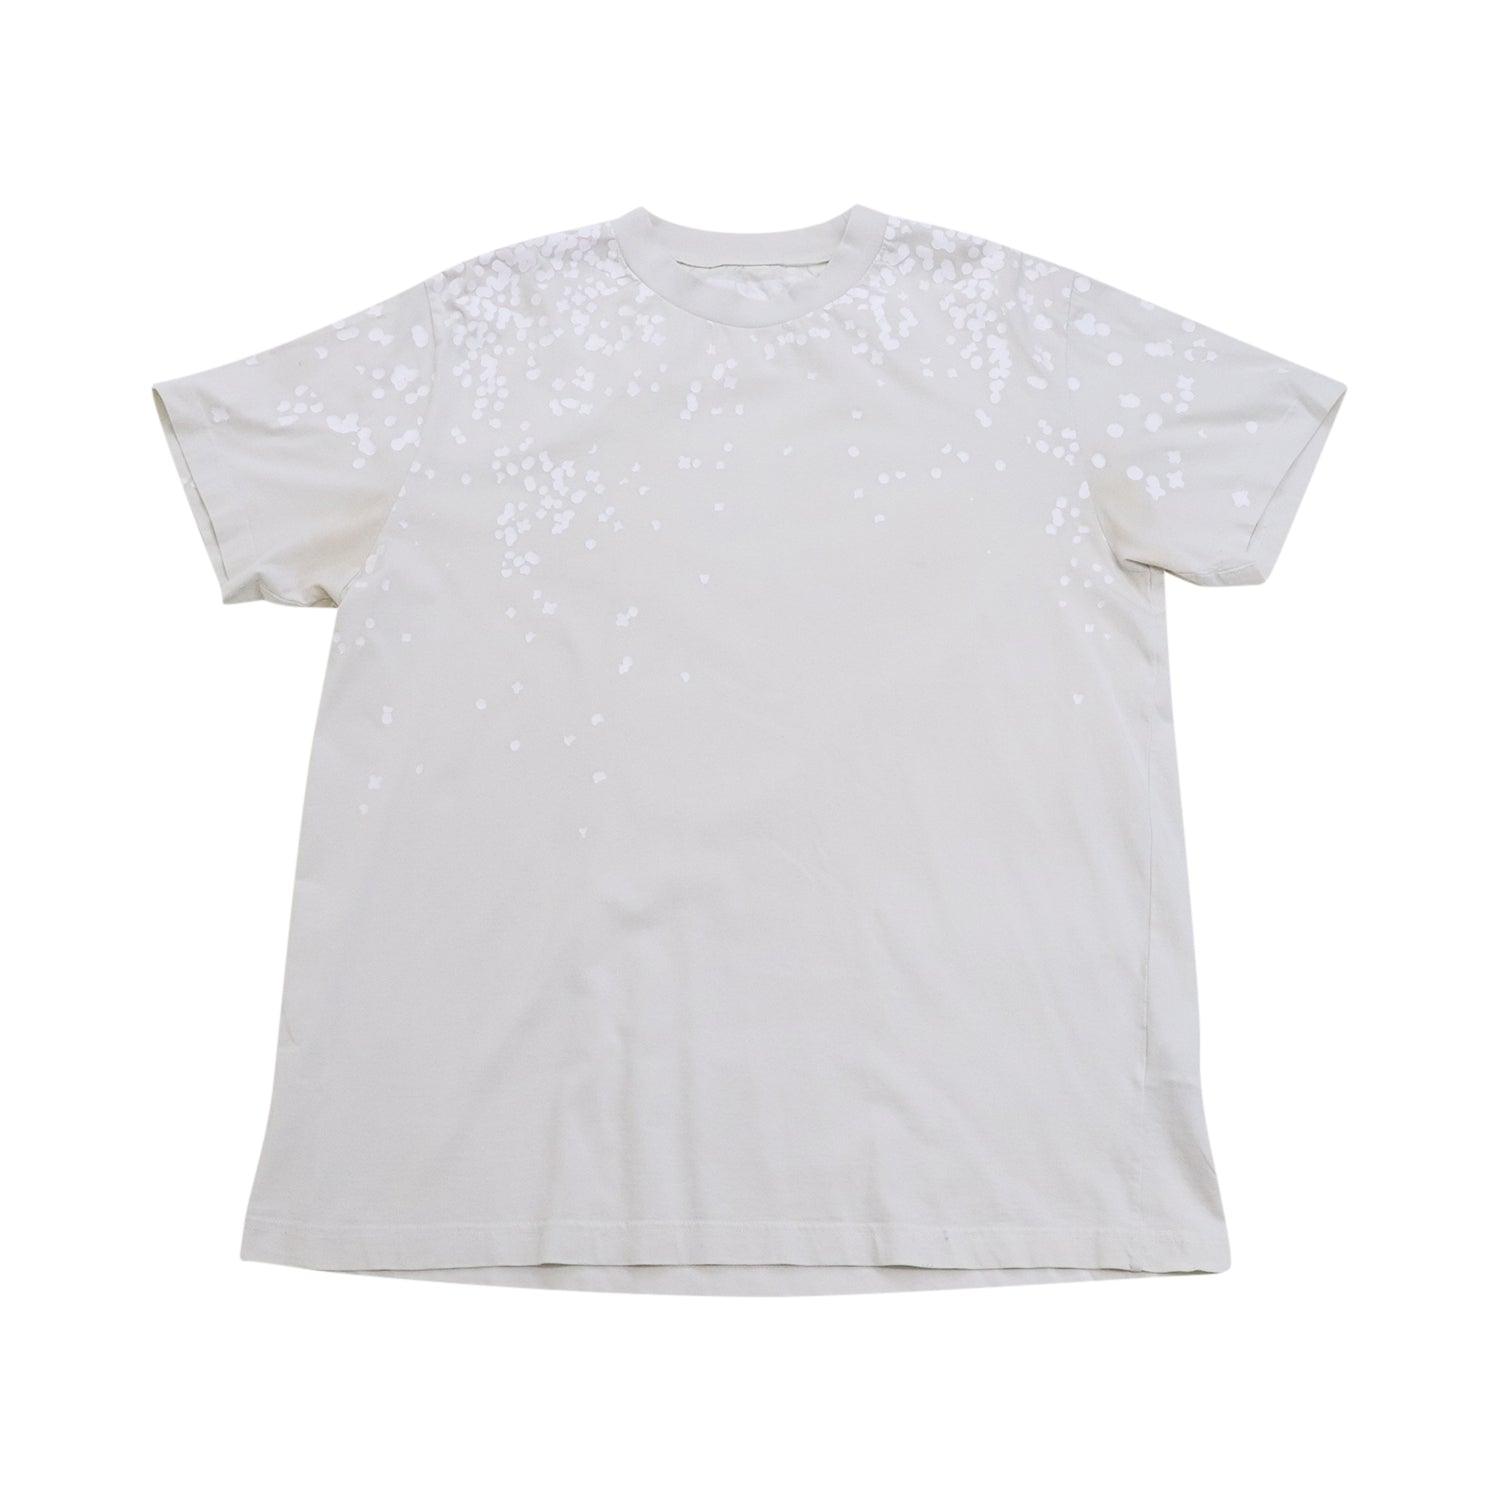 Margiela x H&M T-Shirt - Men's XL - Fashionably Yours